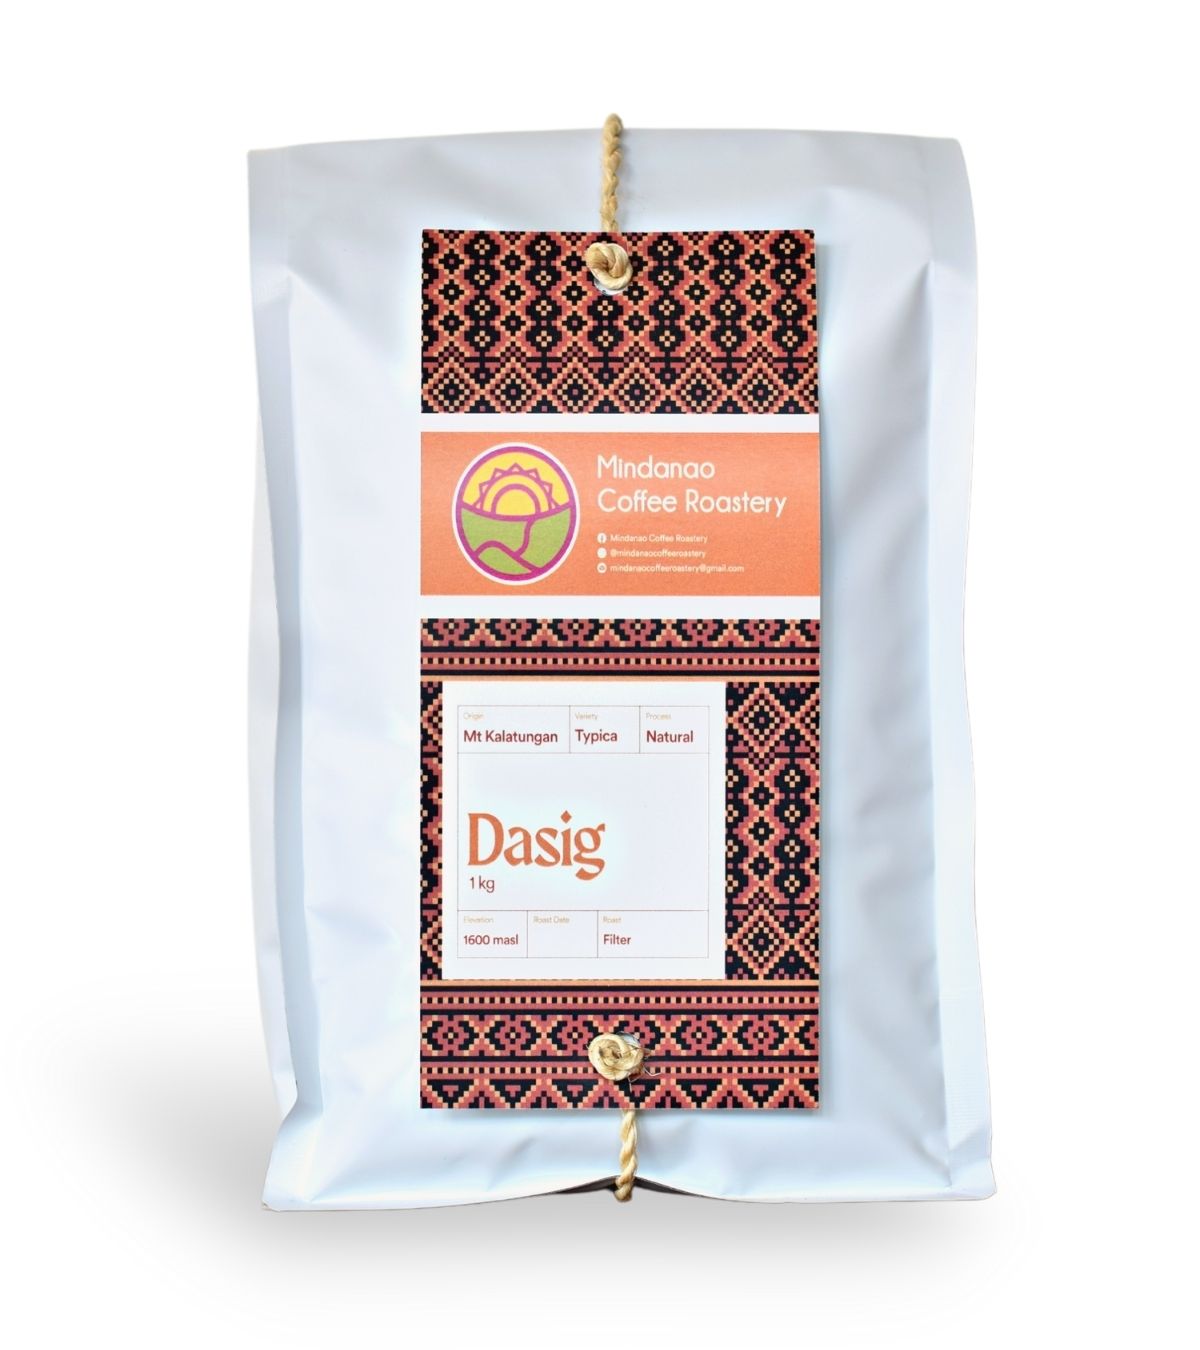 Dasig - Mindanao Coffee Roastery